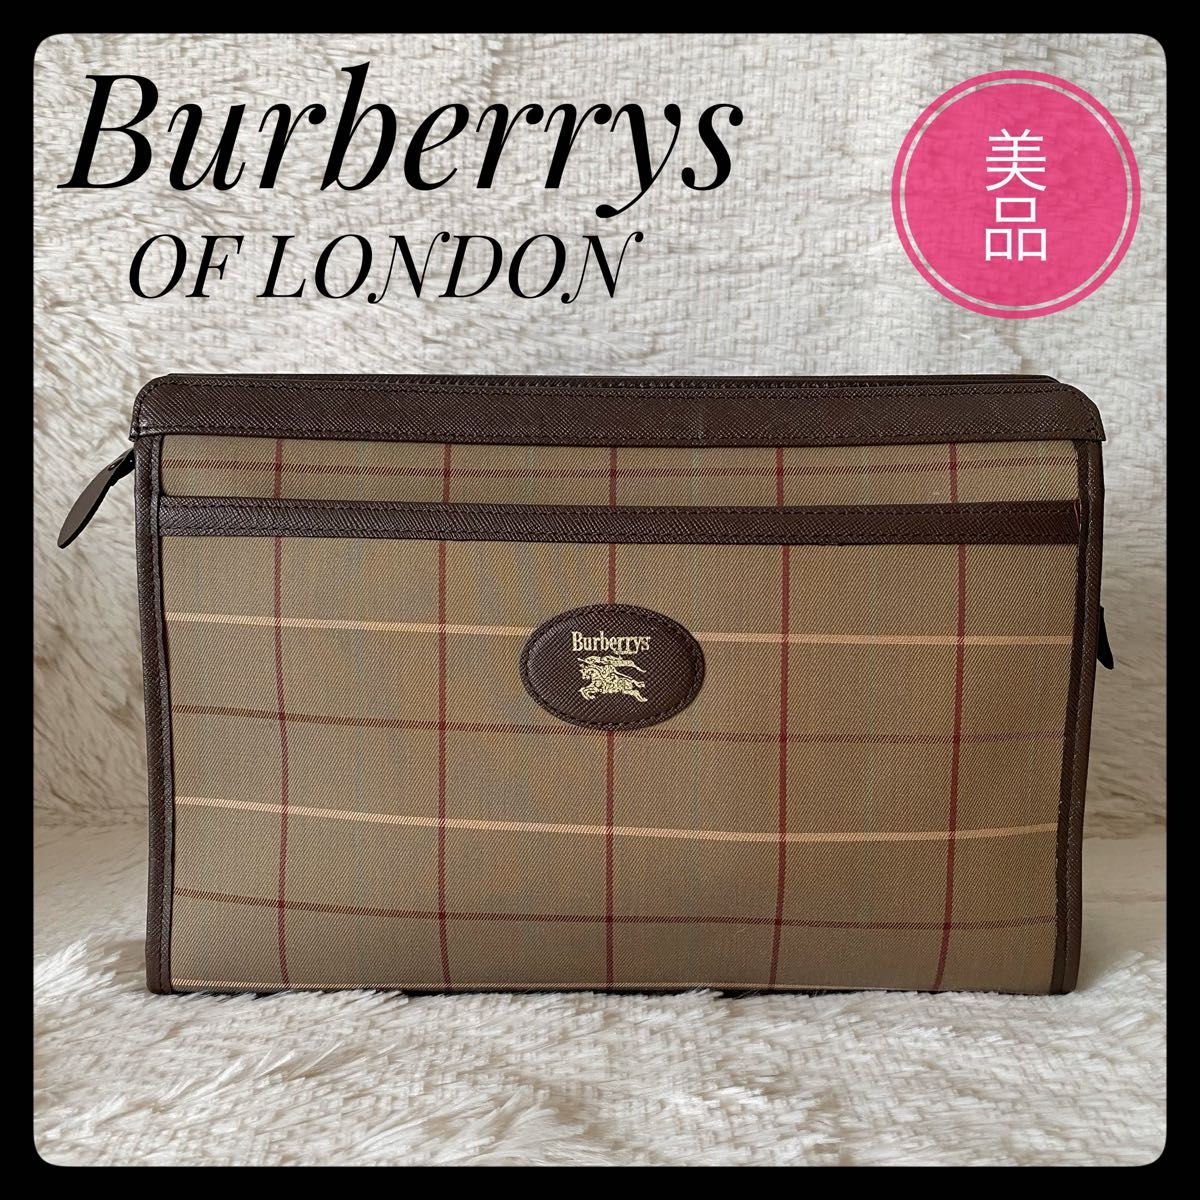 【Burberrys OF LONDON】バーバリーロンドン ヴィンテージ セカンドバッグ クラッチバッグ 希少美品でお買得です！